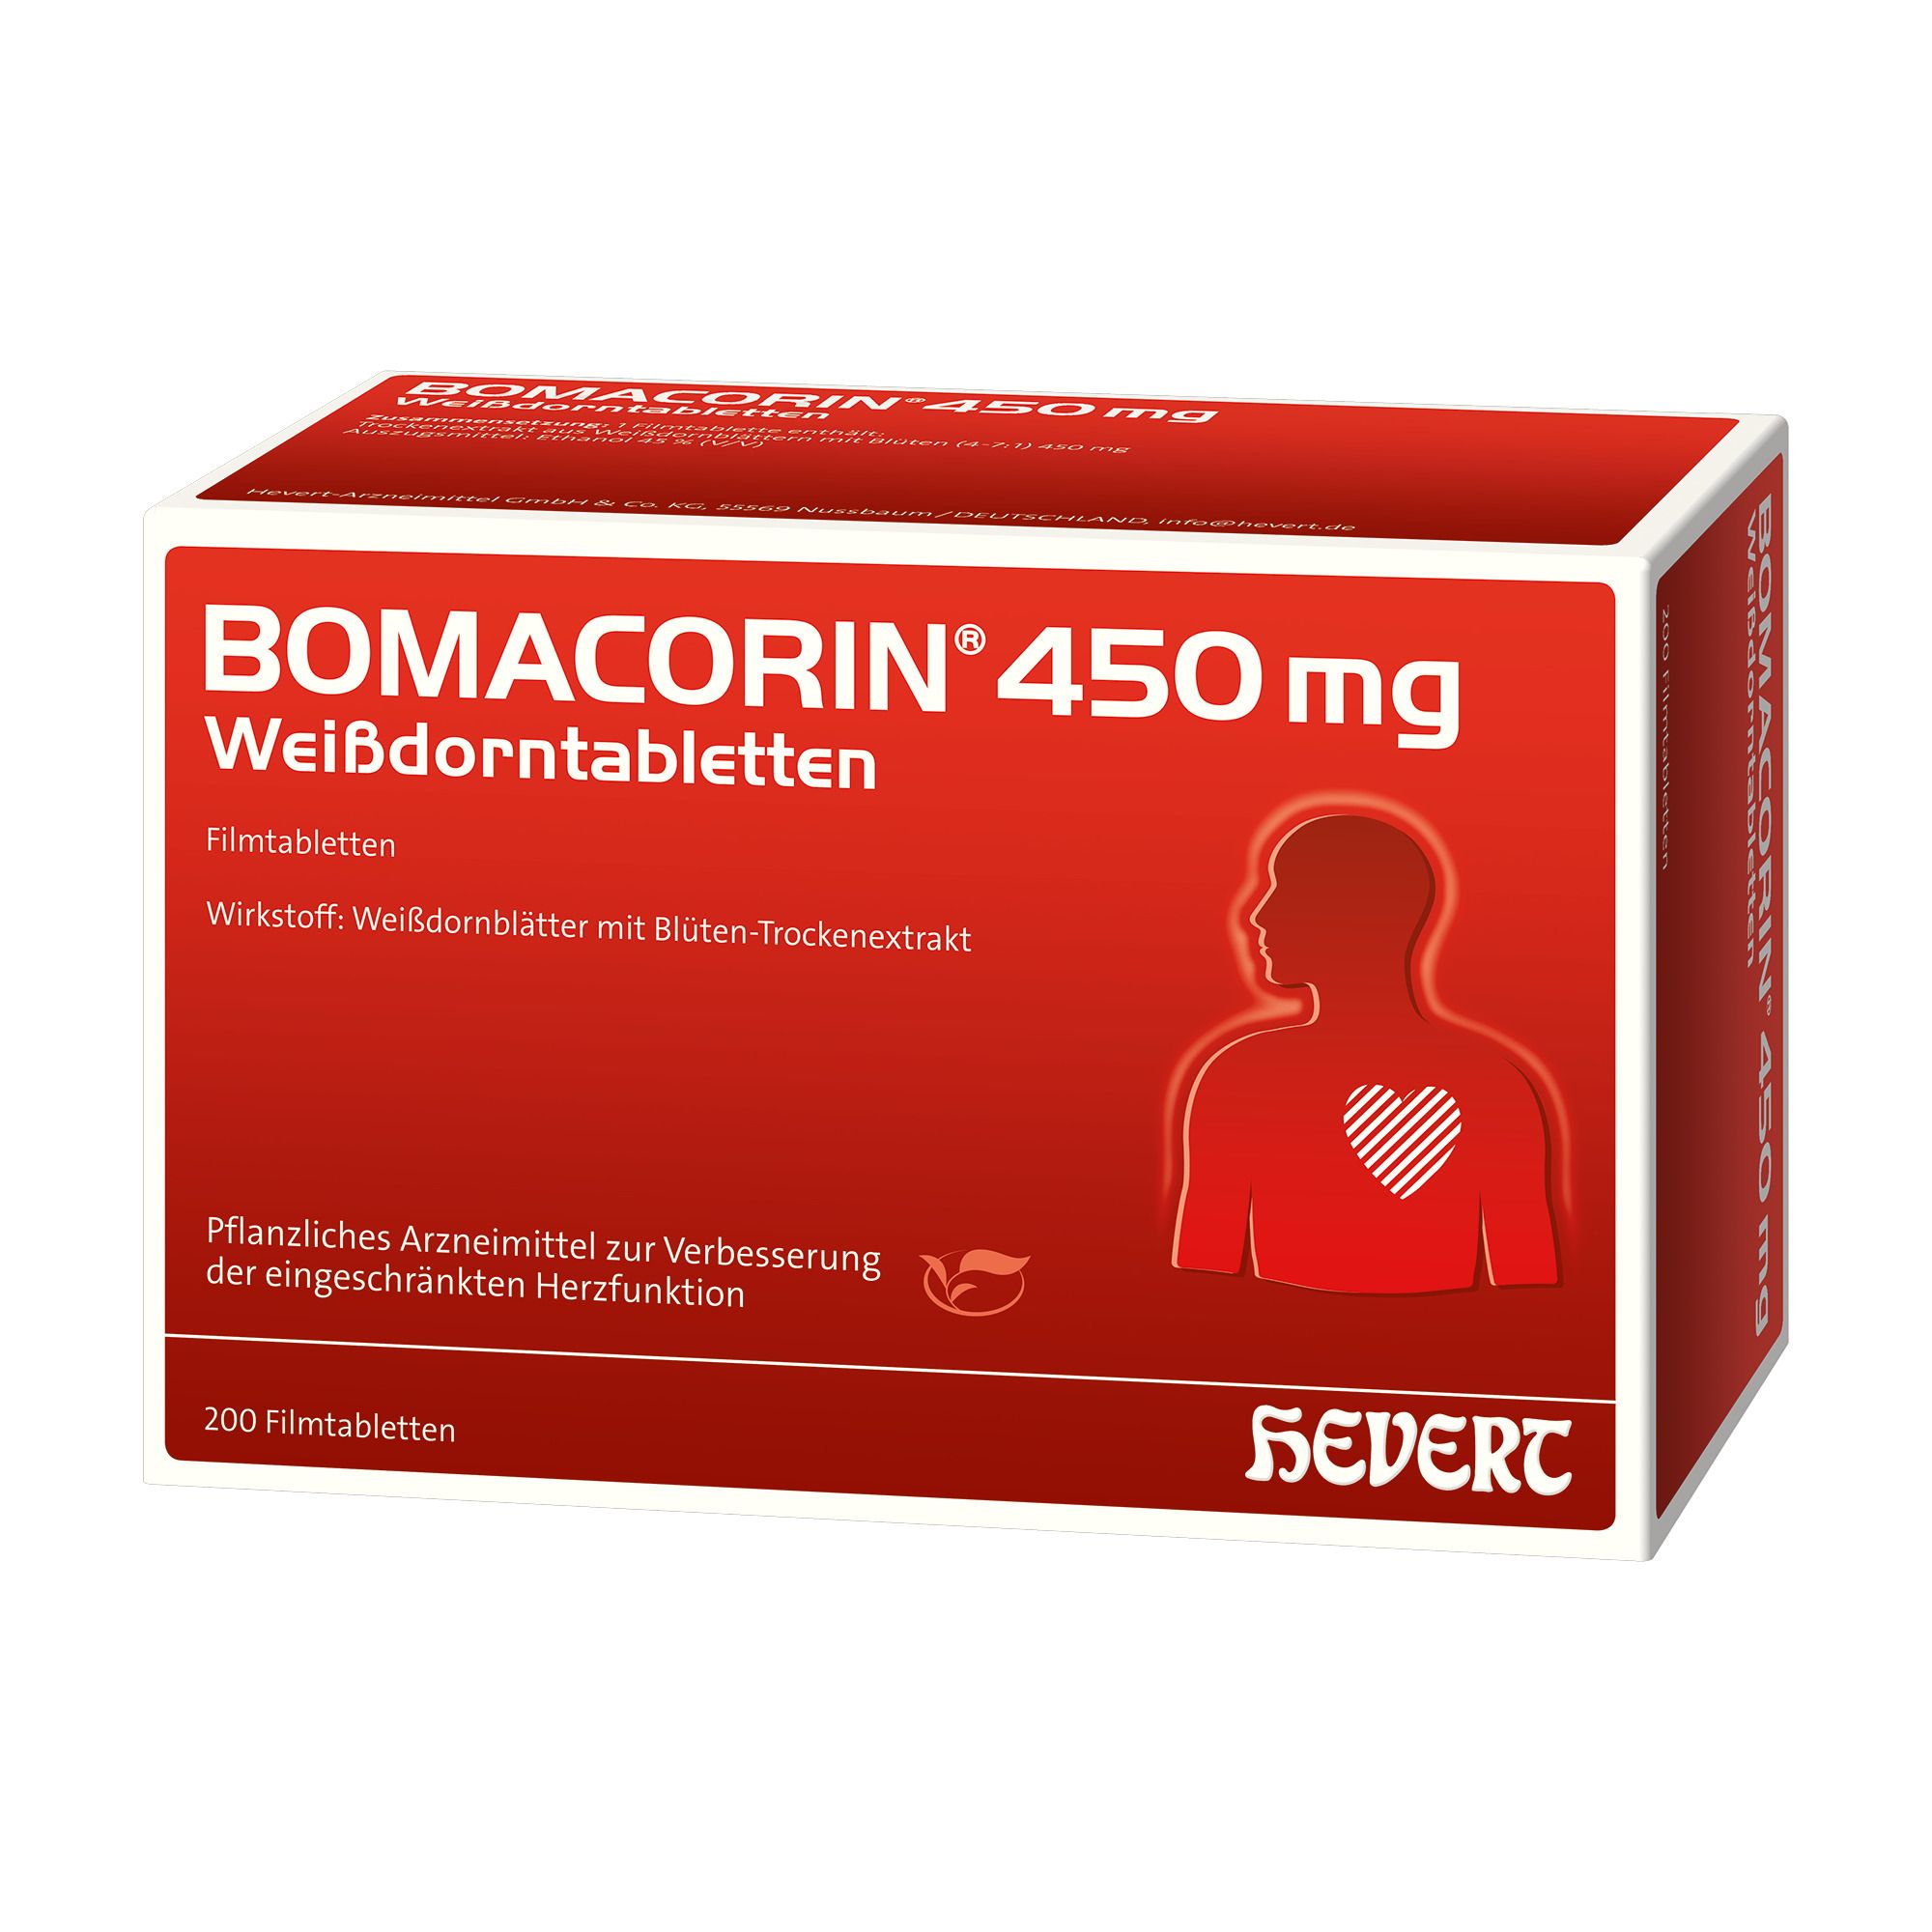 Bomacorin® 450 mg Weißdorntabletten